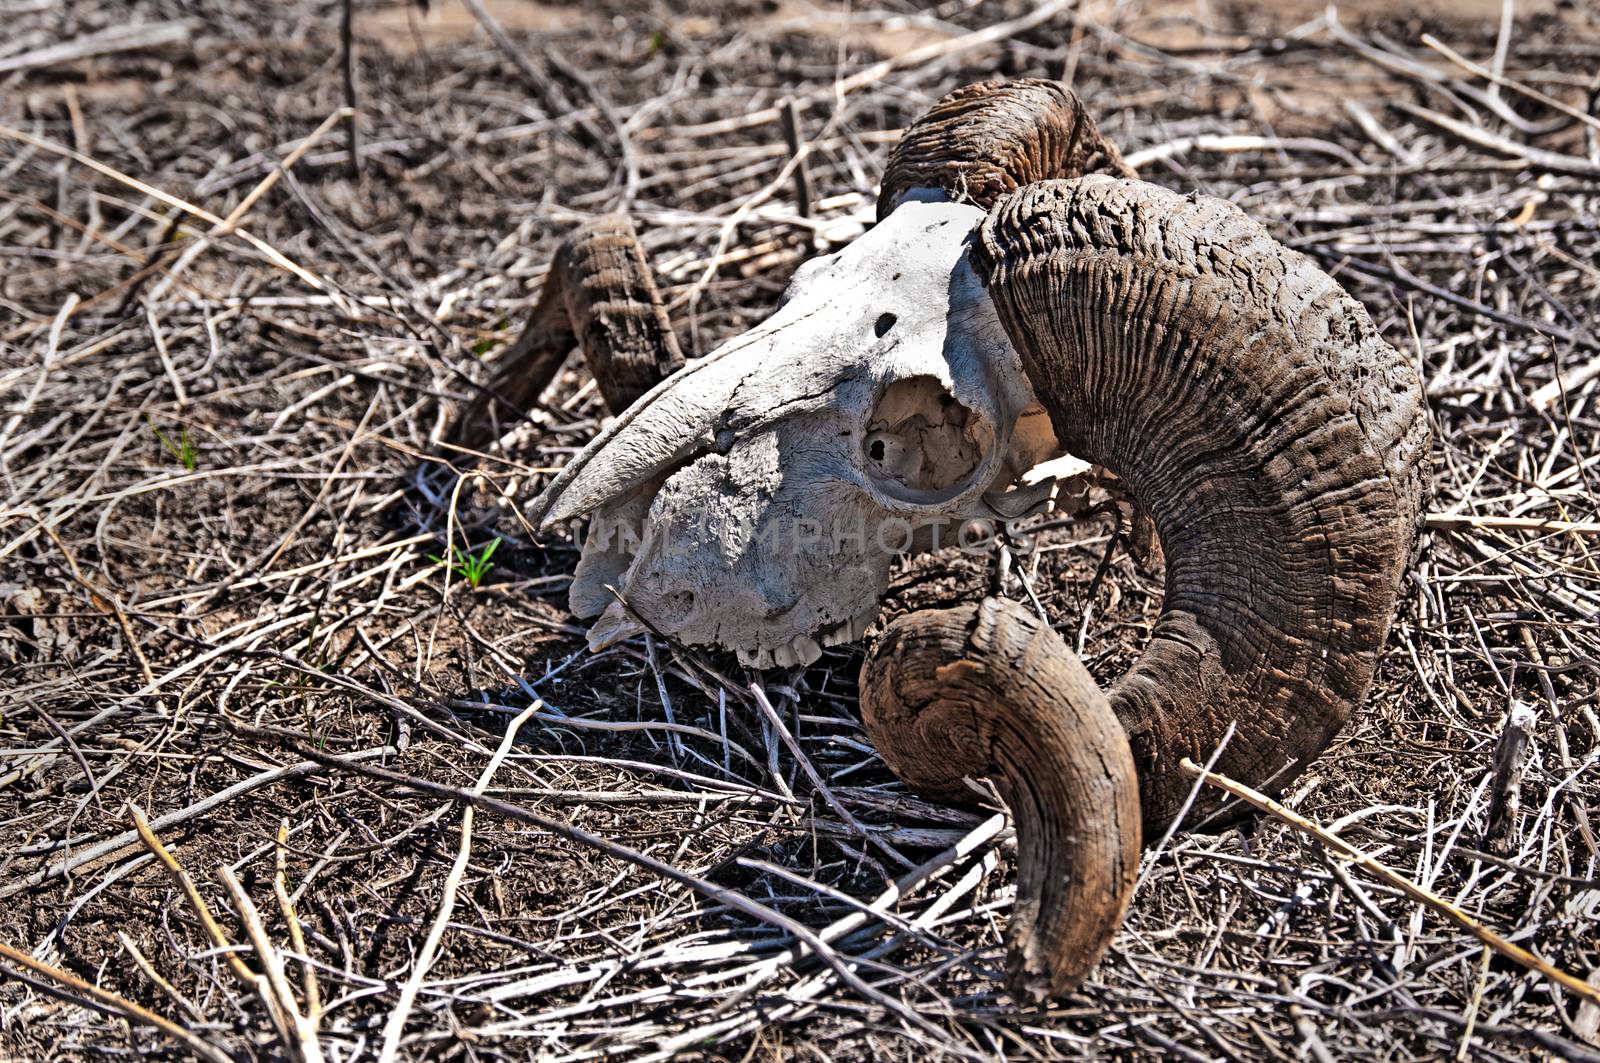 Ram's Skull Weathering on the Prairie by rcarner